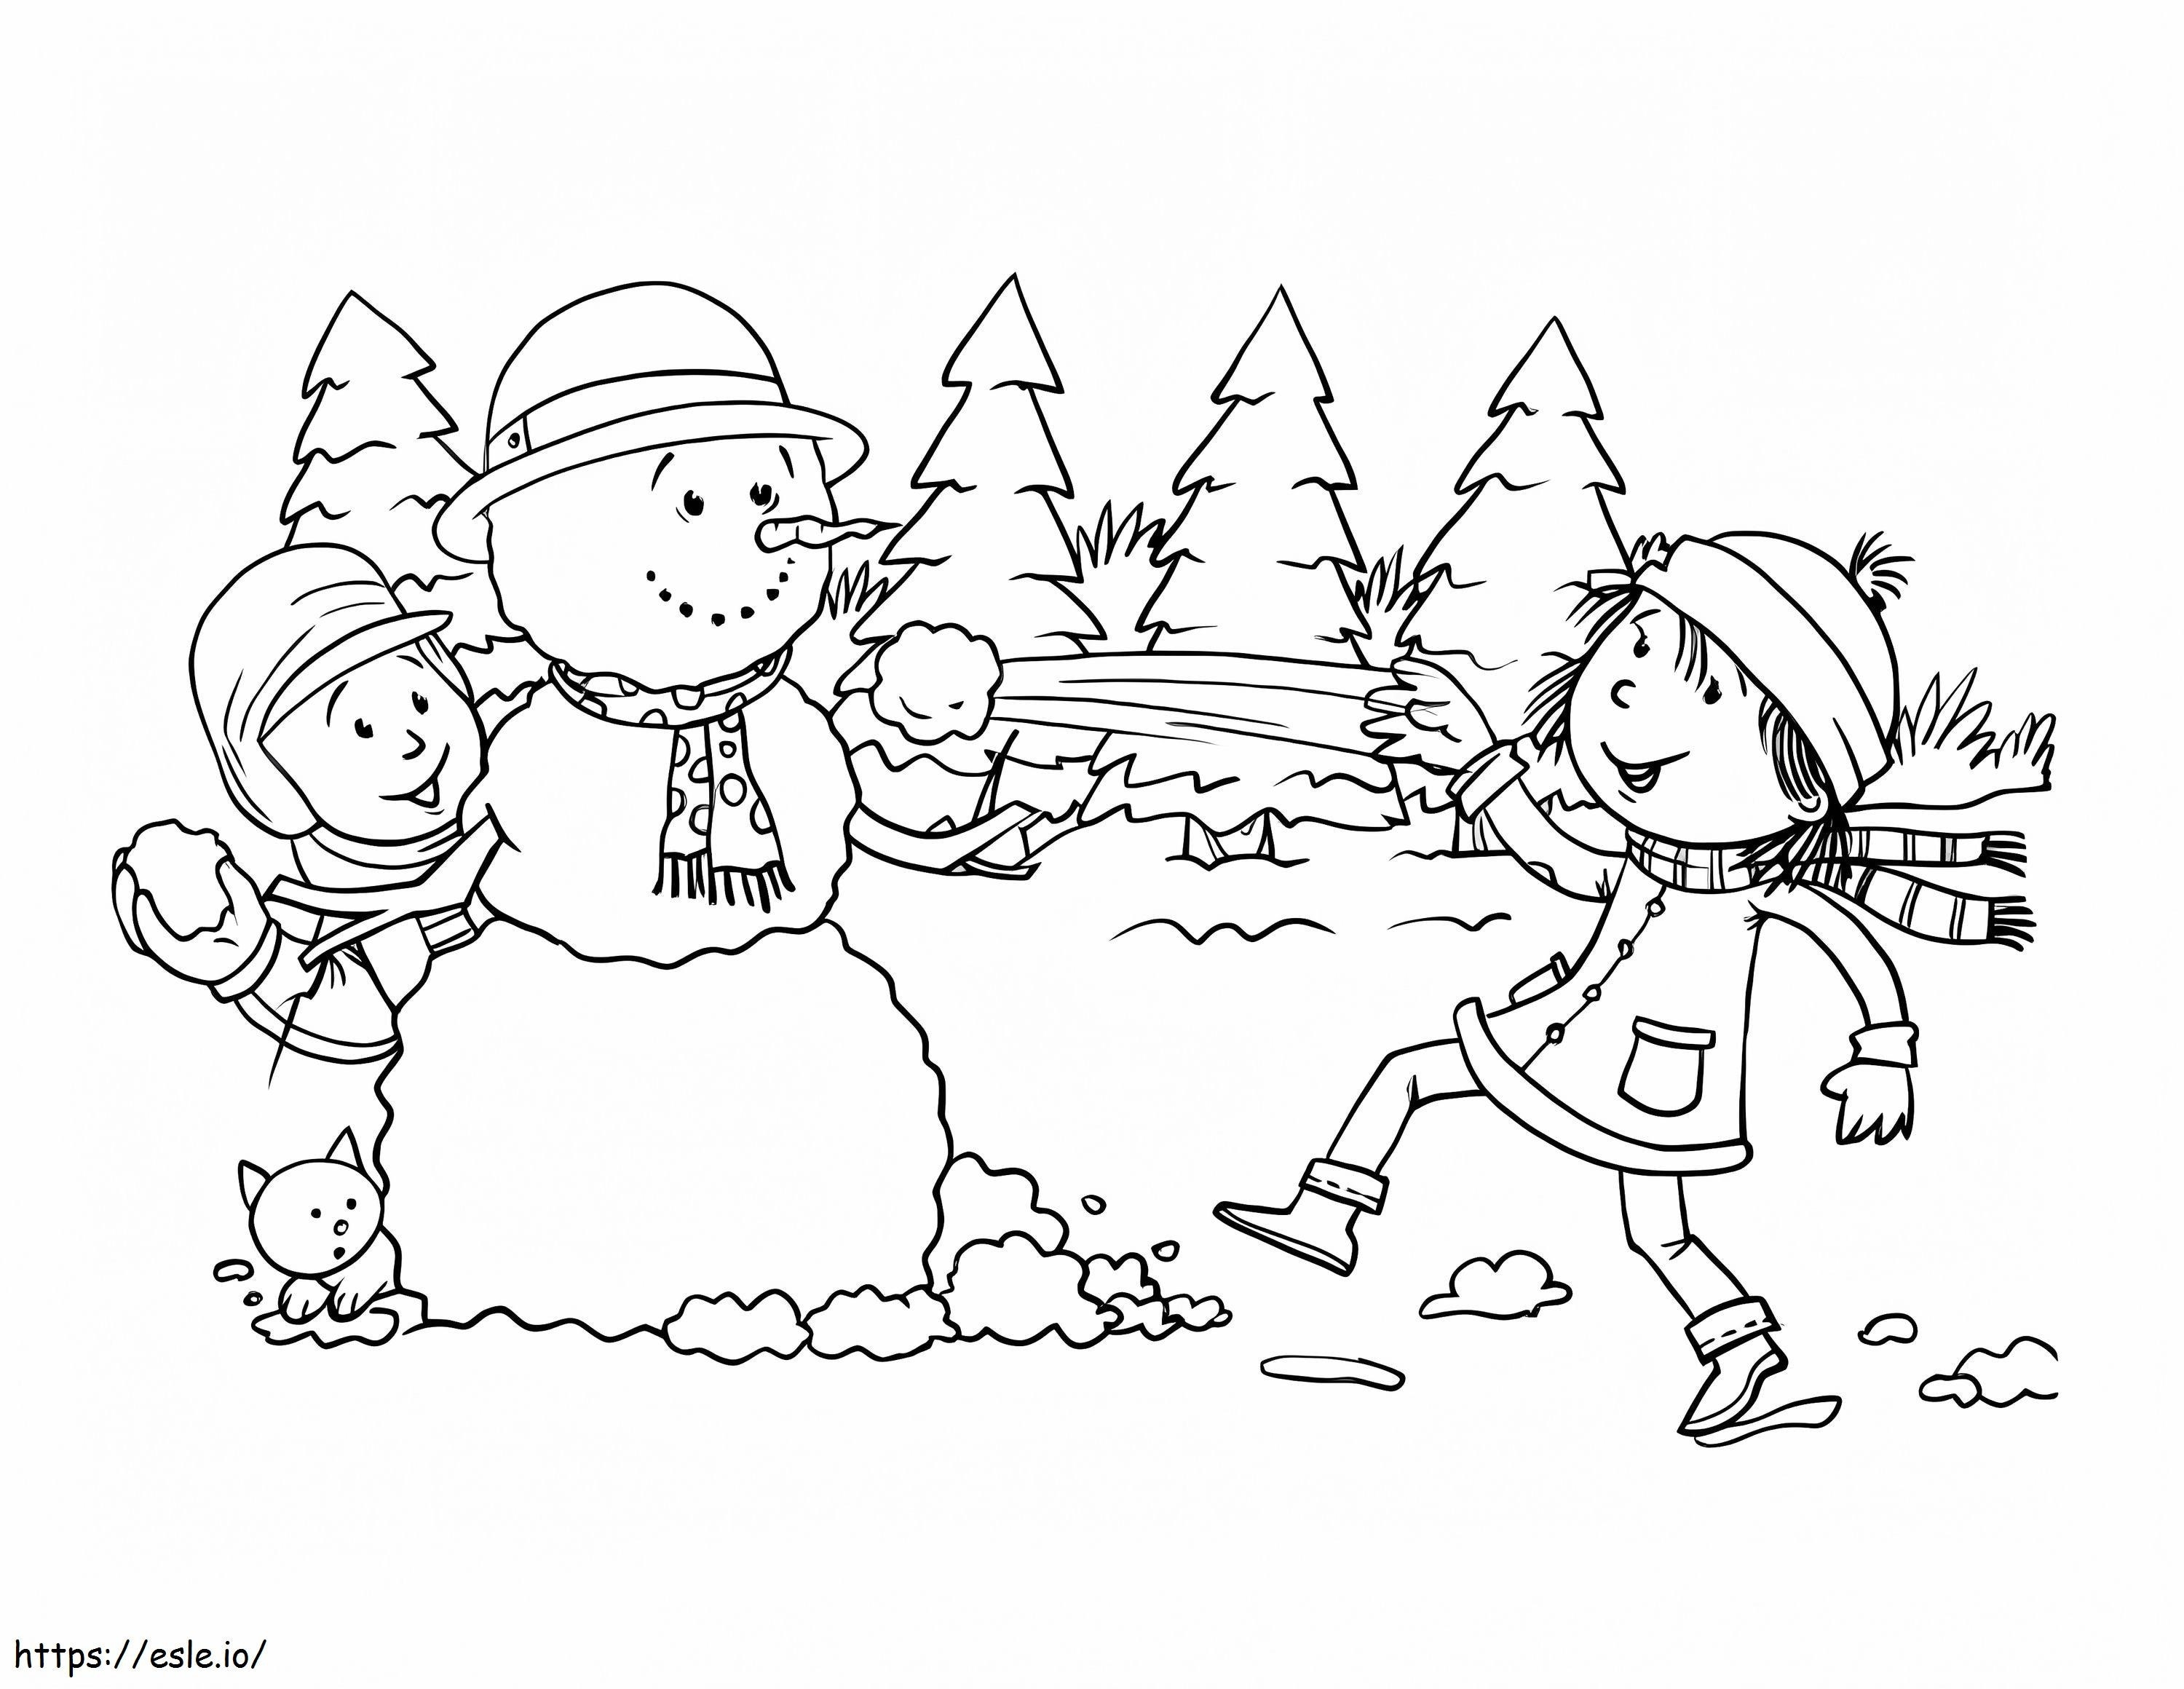 Winter Scene 3 coloring page